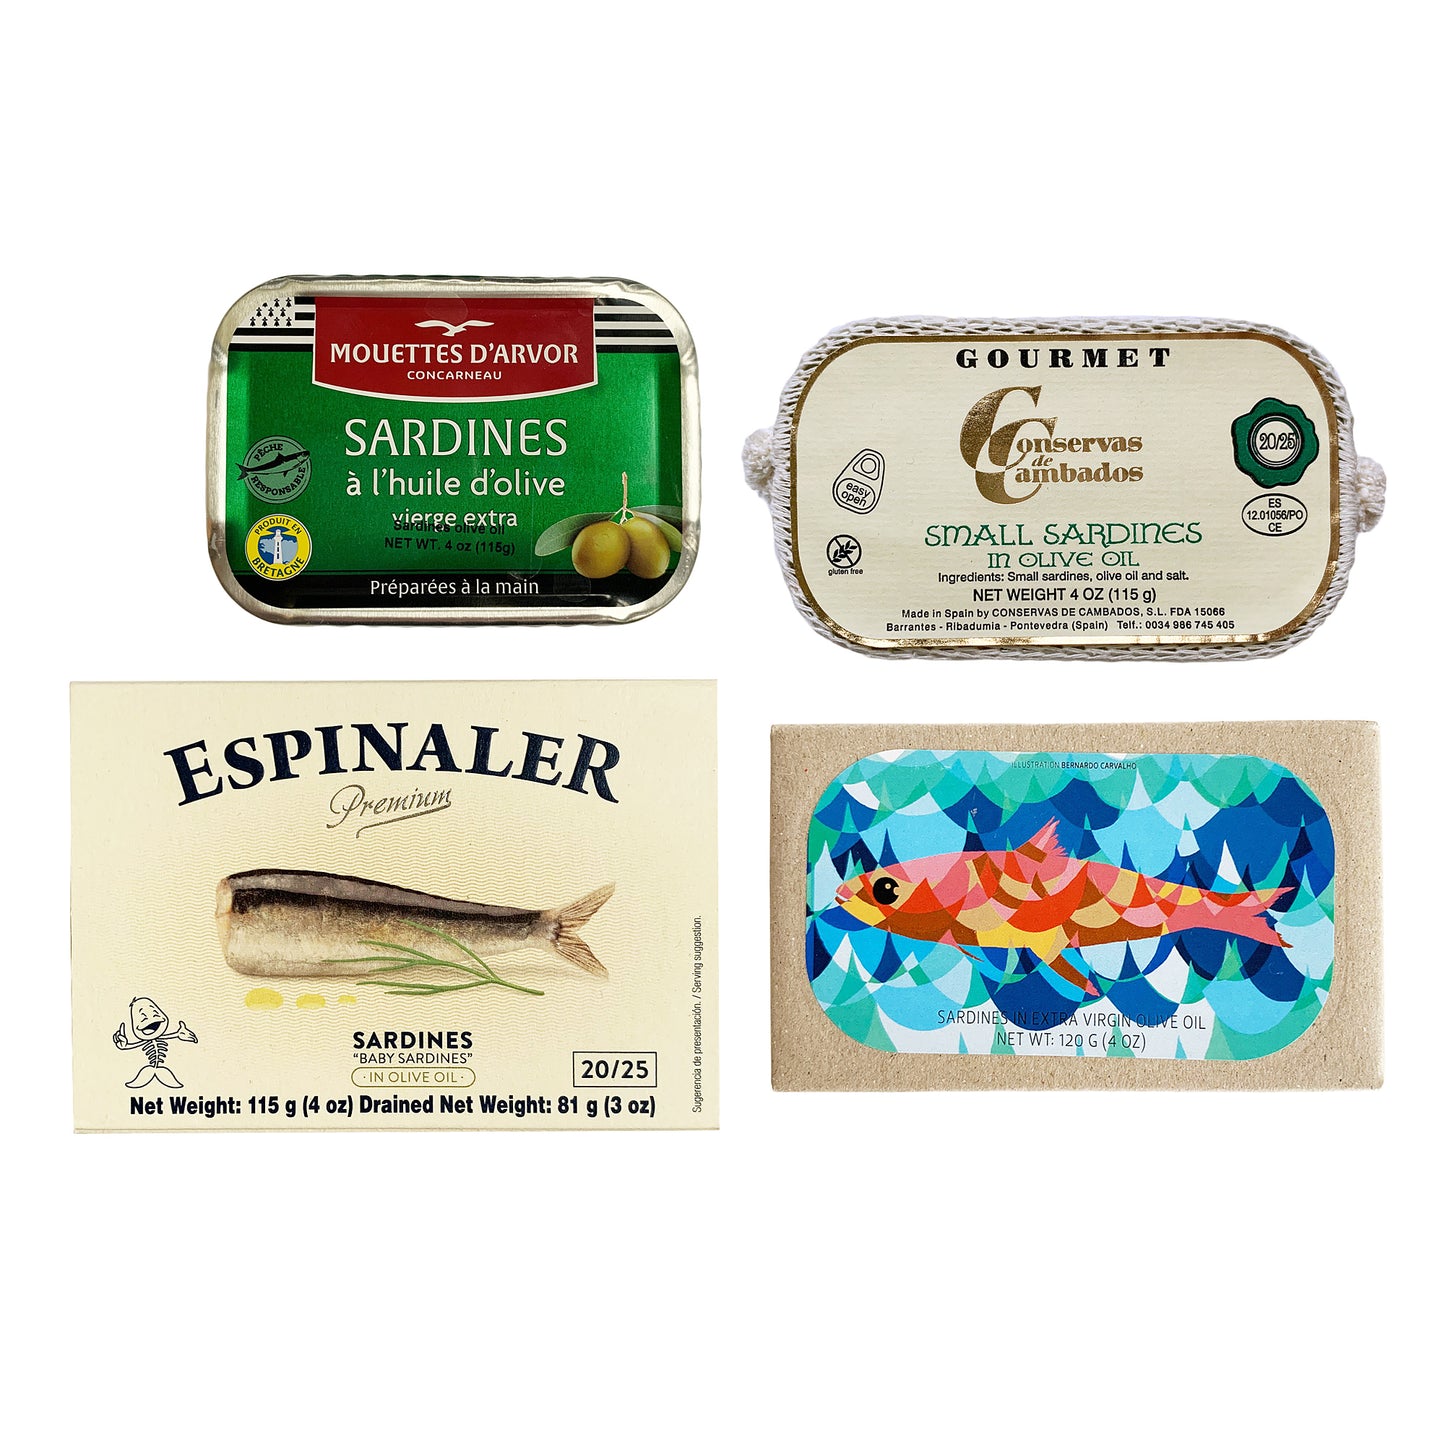 Premium Sardines Variety Pack - Includes Sardines from Les Mouettes D’arvor, Conservas de Cambados, Jose Gourmet, and Espinaler (4 items)